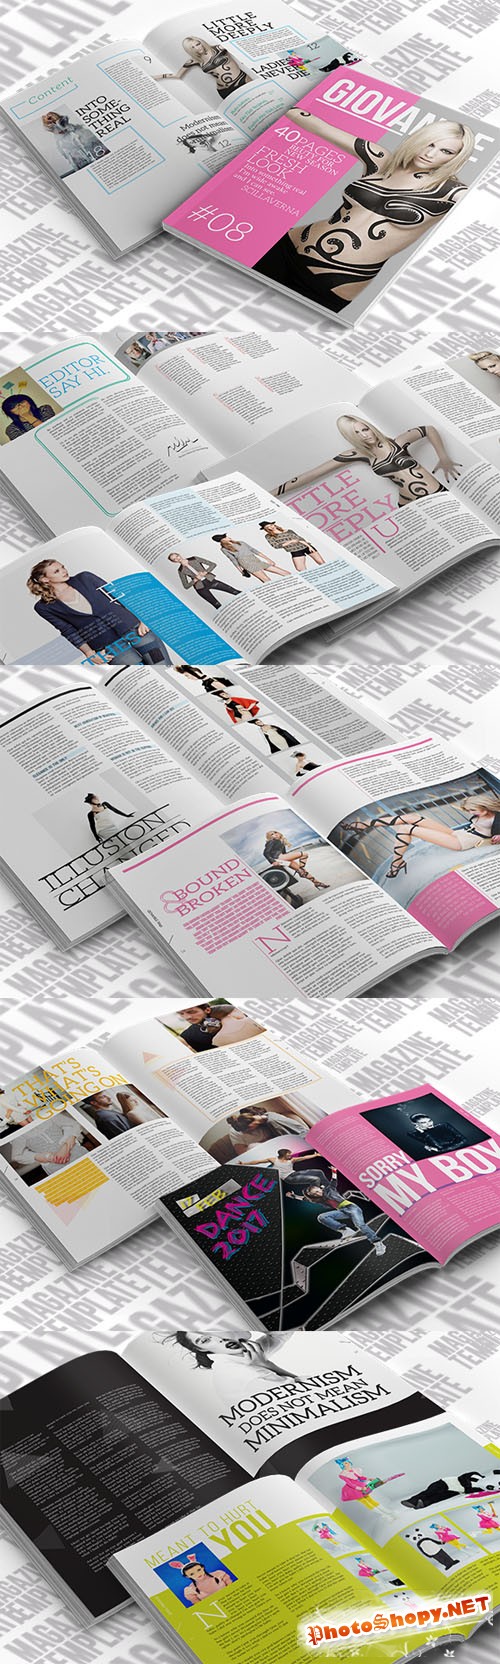 CreativeMarket - InDesign Magazine Template 27876